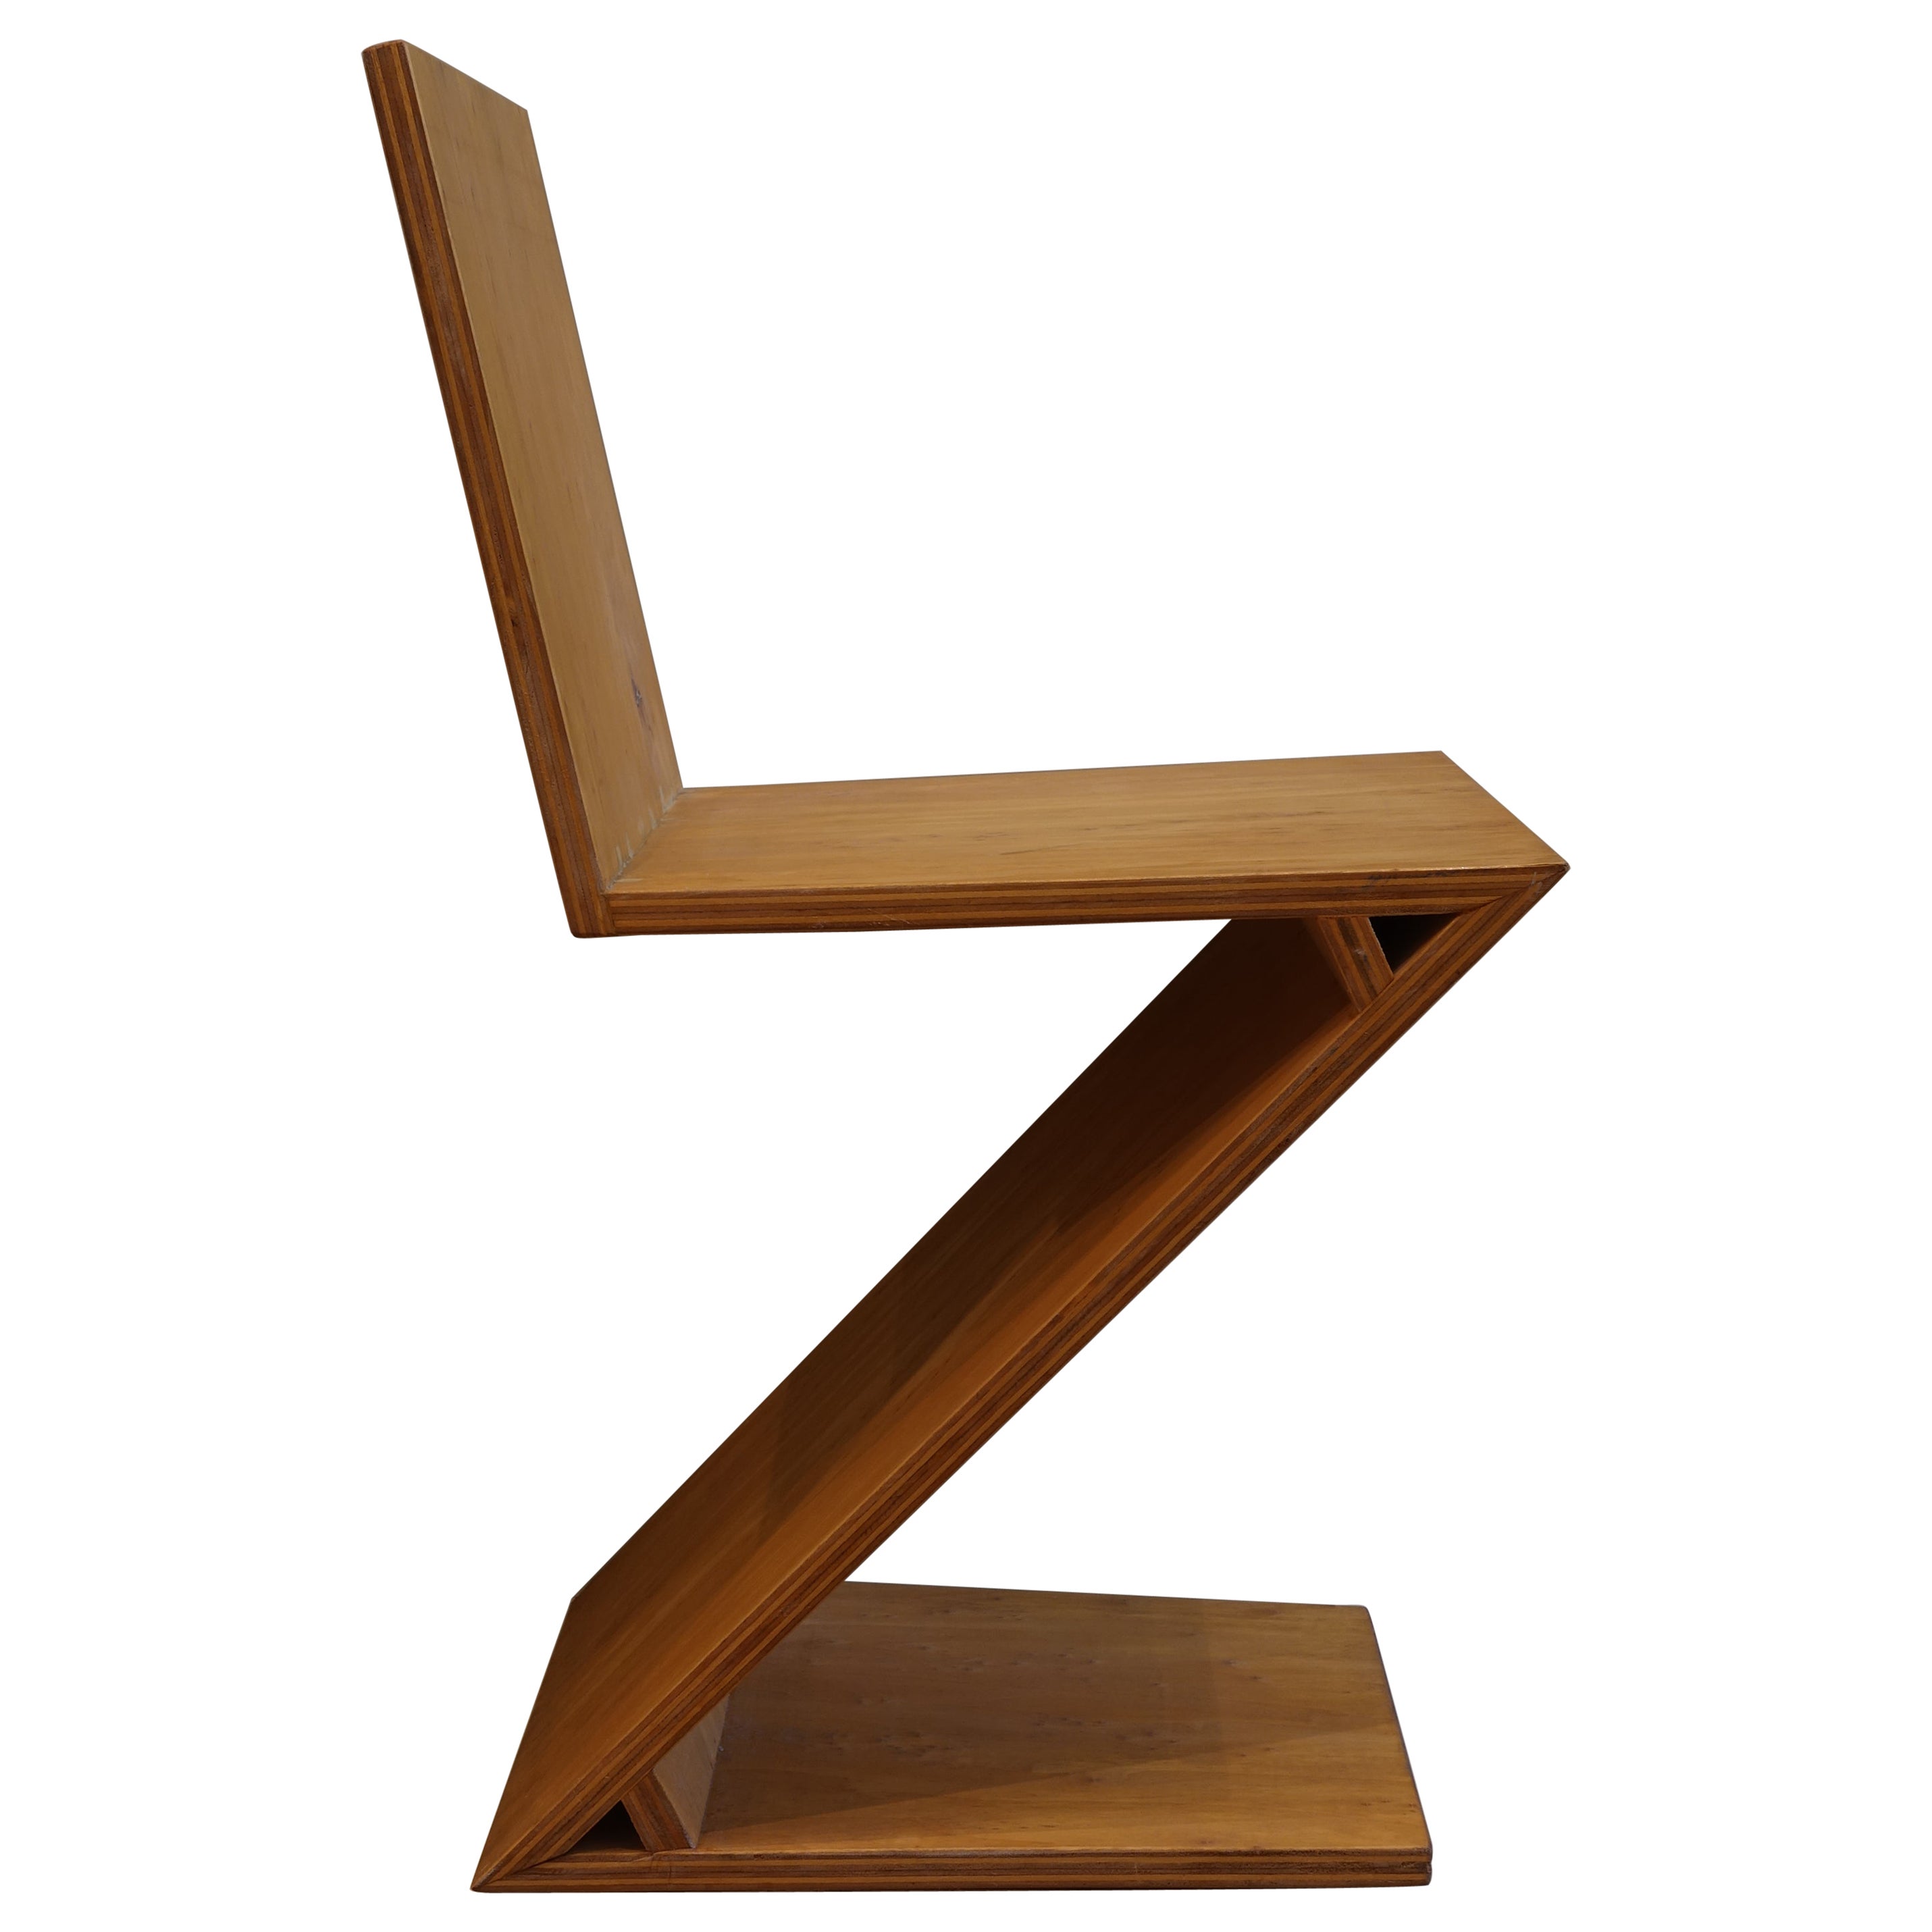 Zigzag chair prototype - Netherlands, 1970